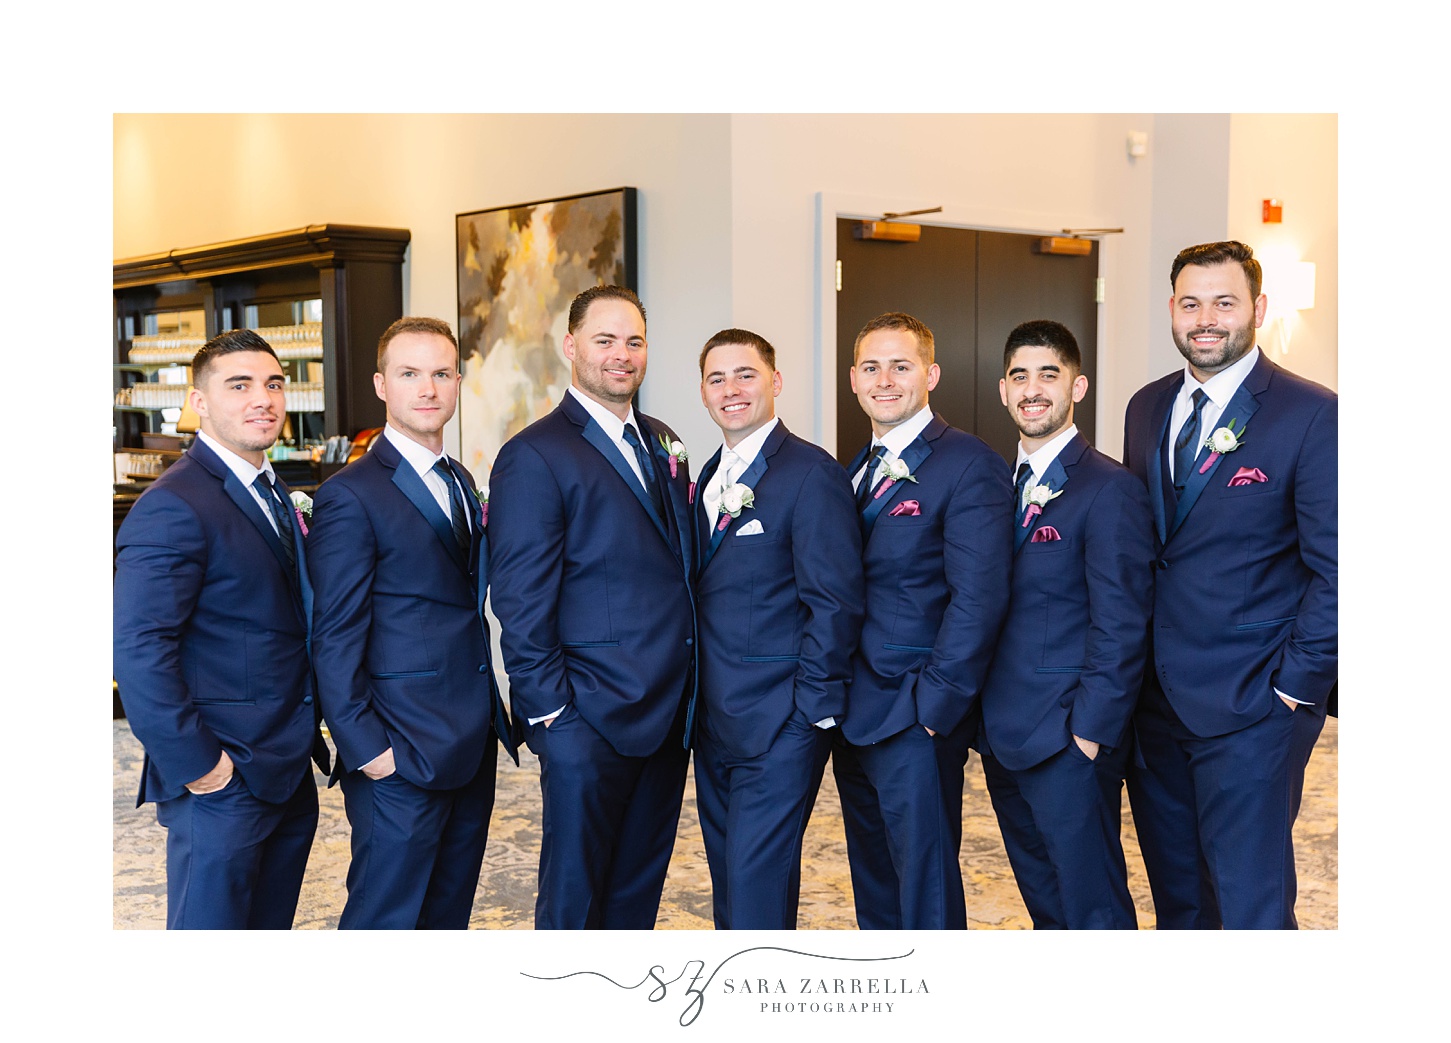 groom and groomsmen pose in navy suits